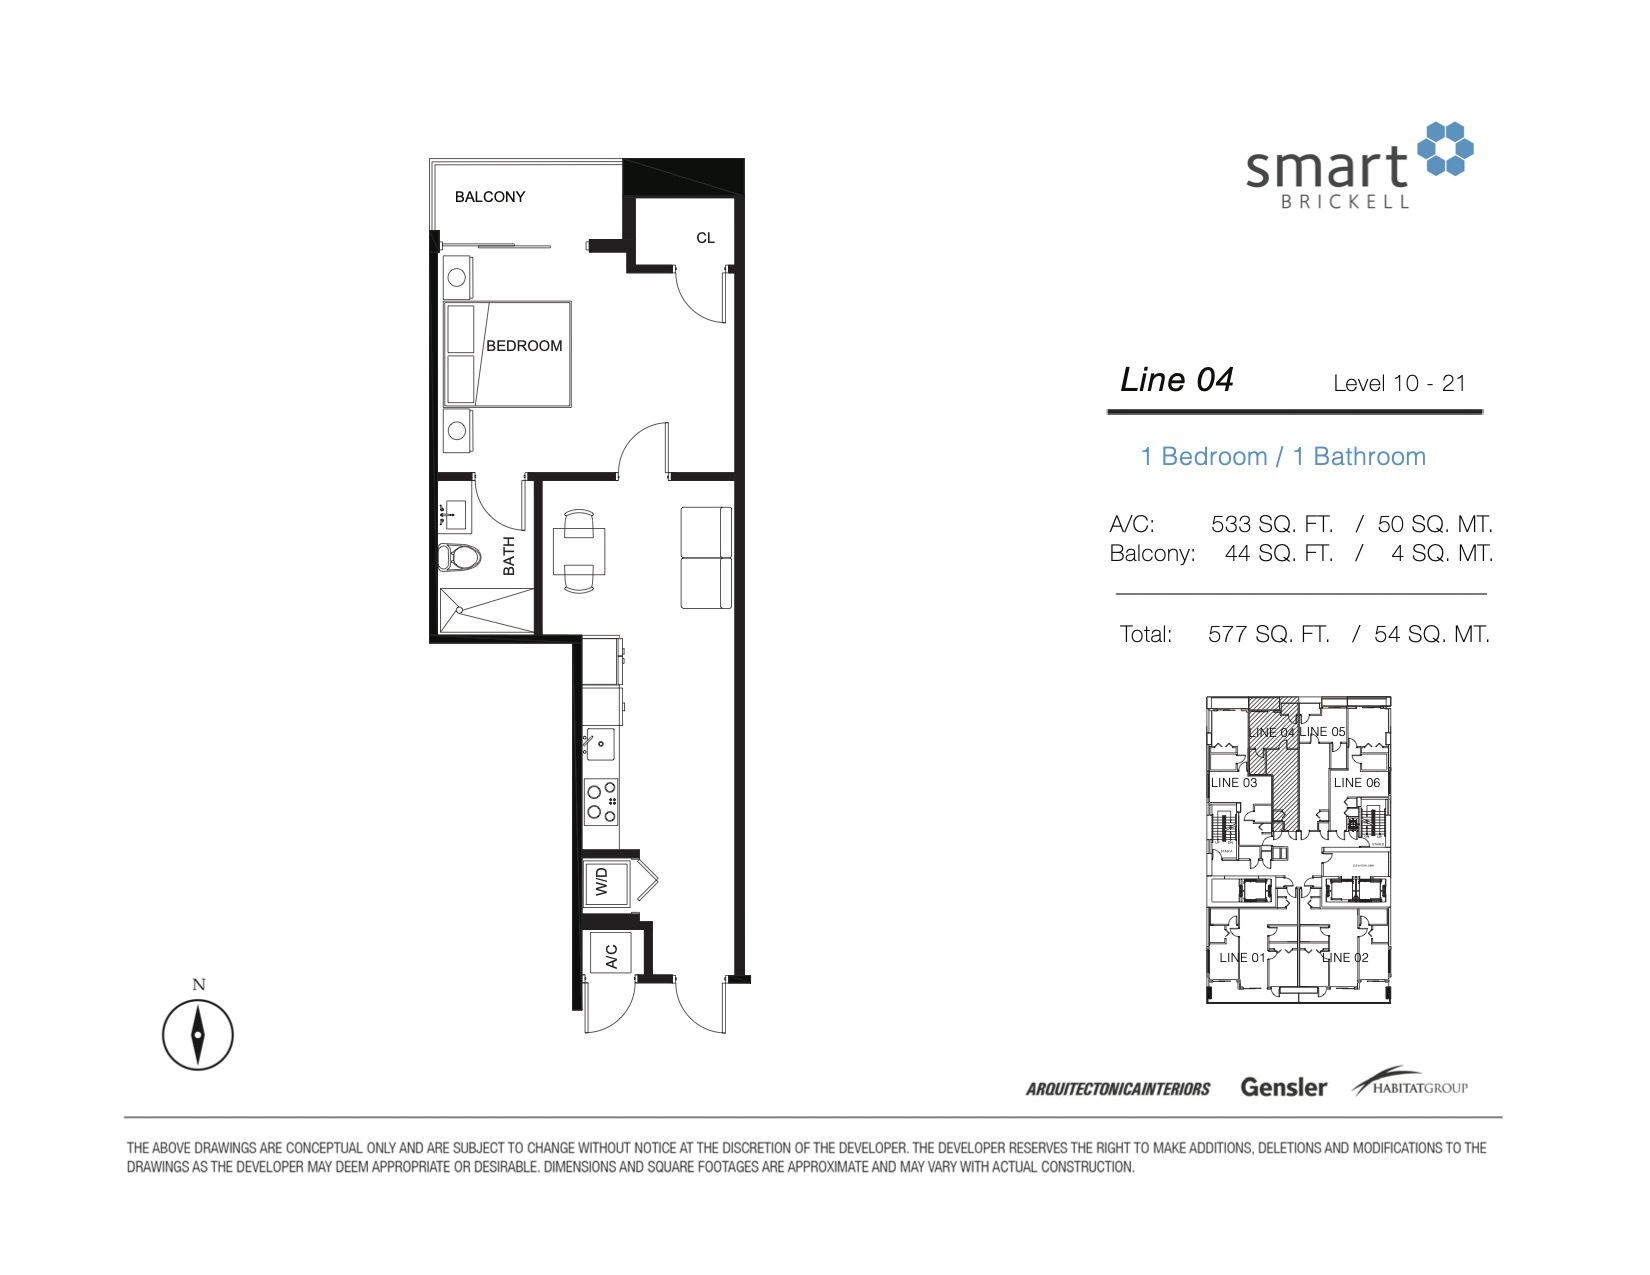 Floor Plan for Smart Brickell Floorplans, Line 04 Level 10-21